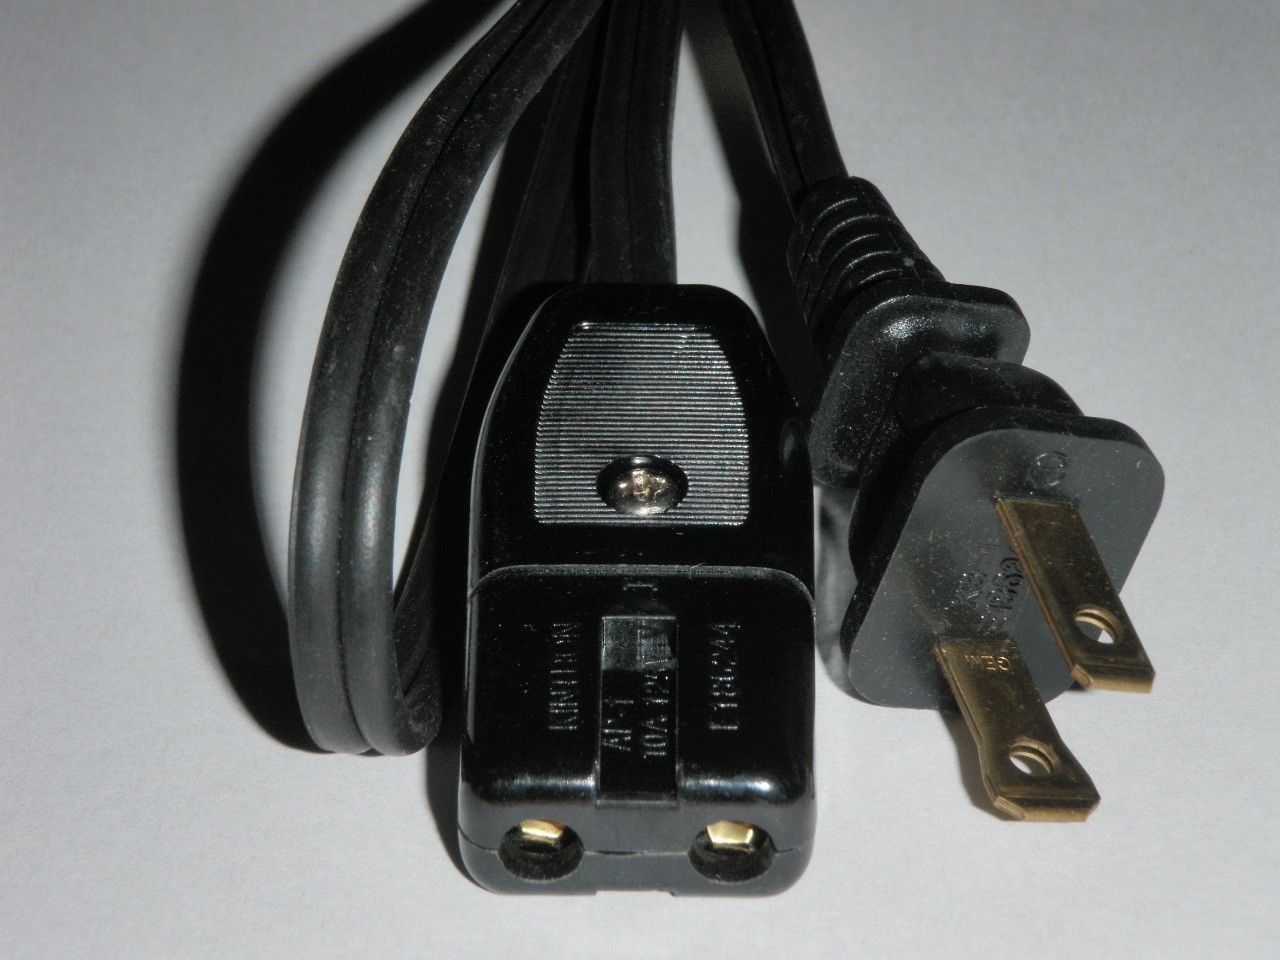 Power Cord for Back to Basics Stir Crazy Popcorn Popper Model PC17583 (2pin 36") - $15.67